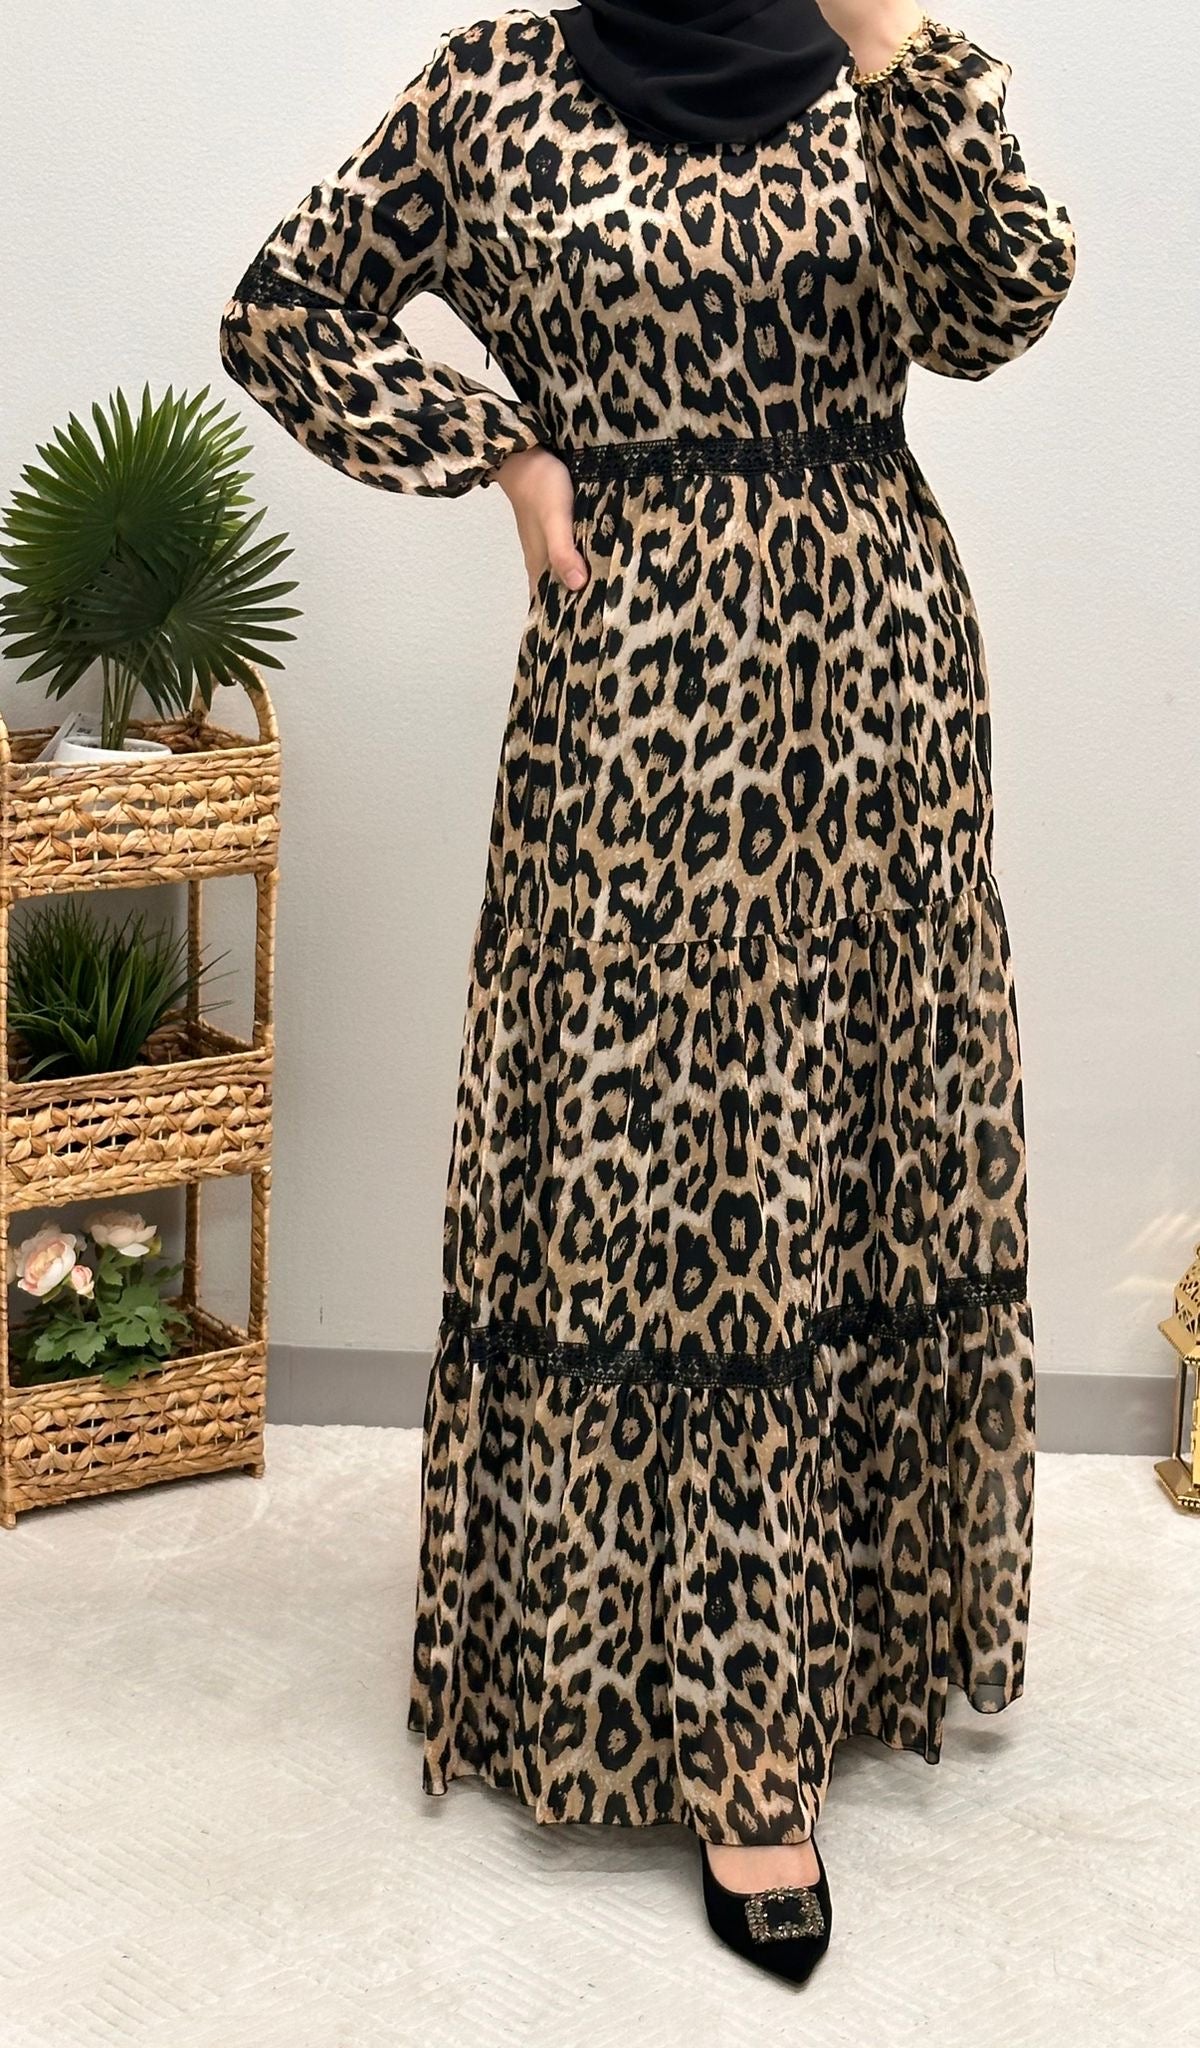 shafon tiger dress